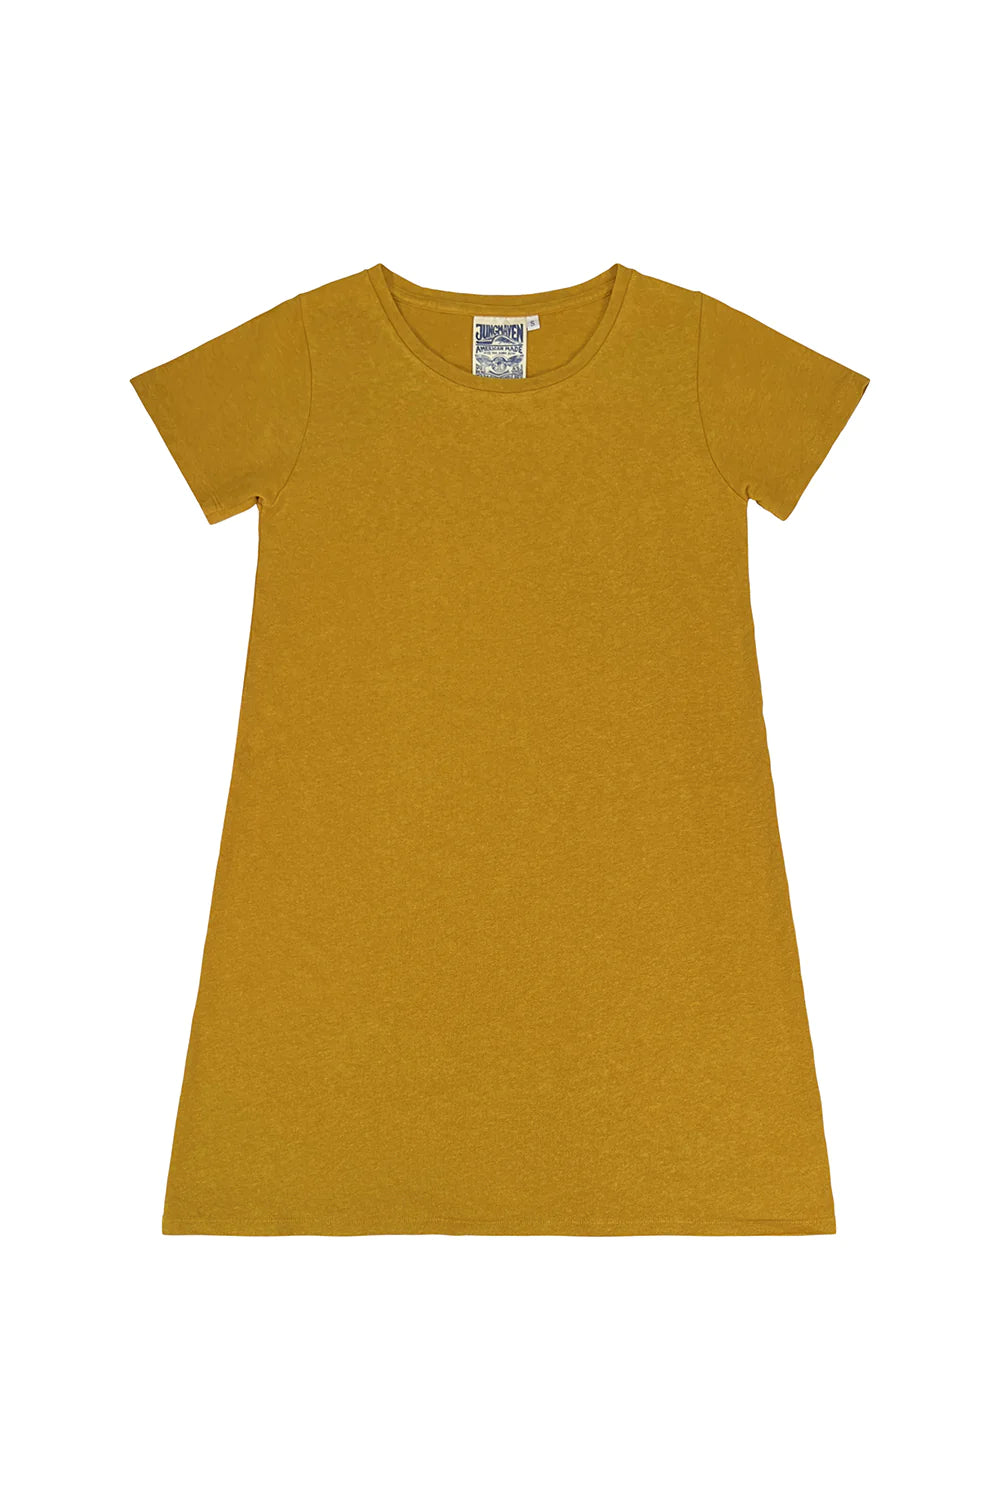 Jungmaven | Rae Line Dress - Mustard Yellow